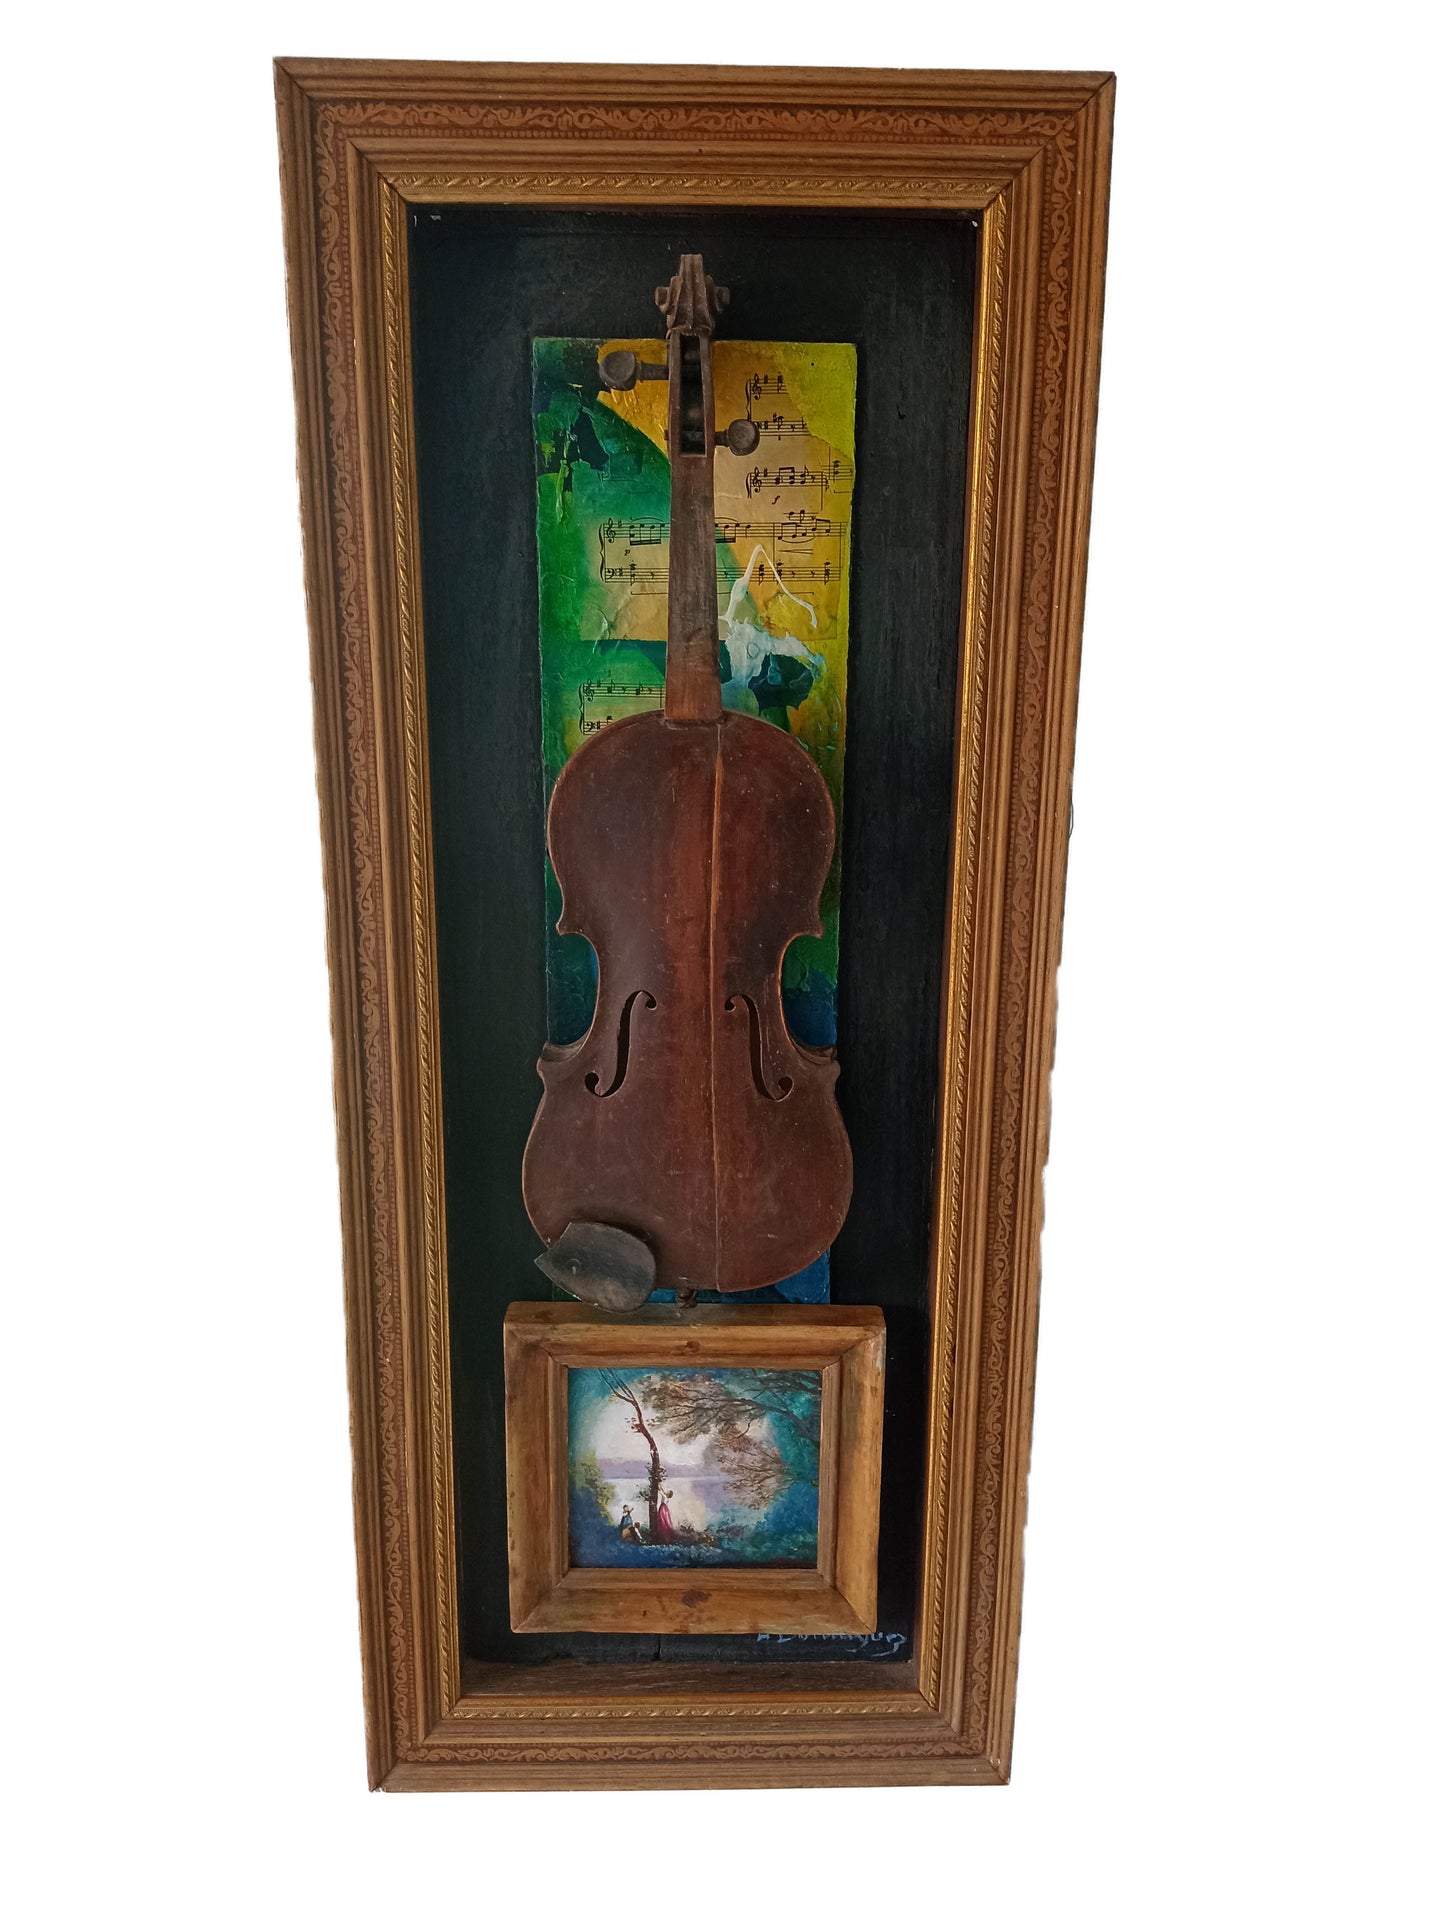 Old Melody - Wood - Violin - Home Decor - KMNK Deco 